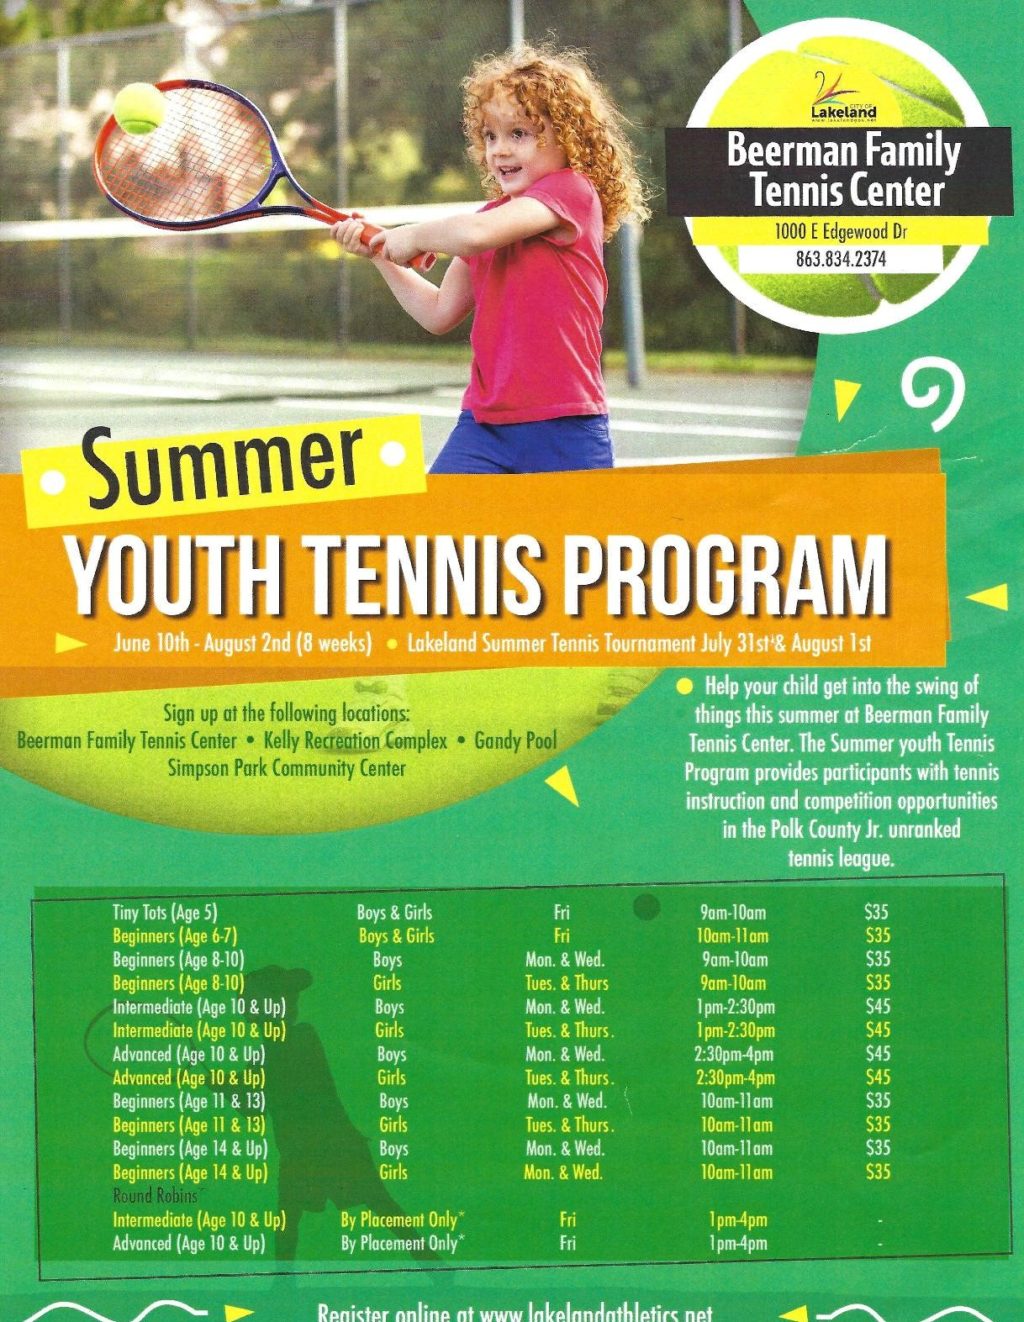 Summer Youth Tennis Programs at Beerman Family Tennis Center Lakeland Mom